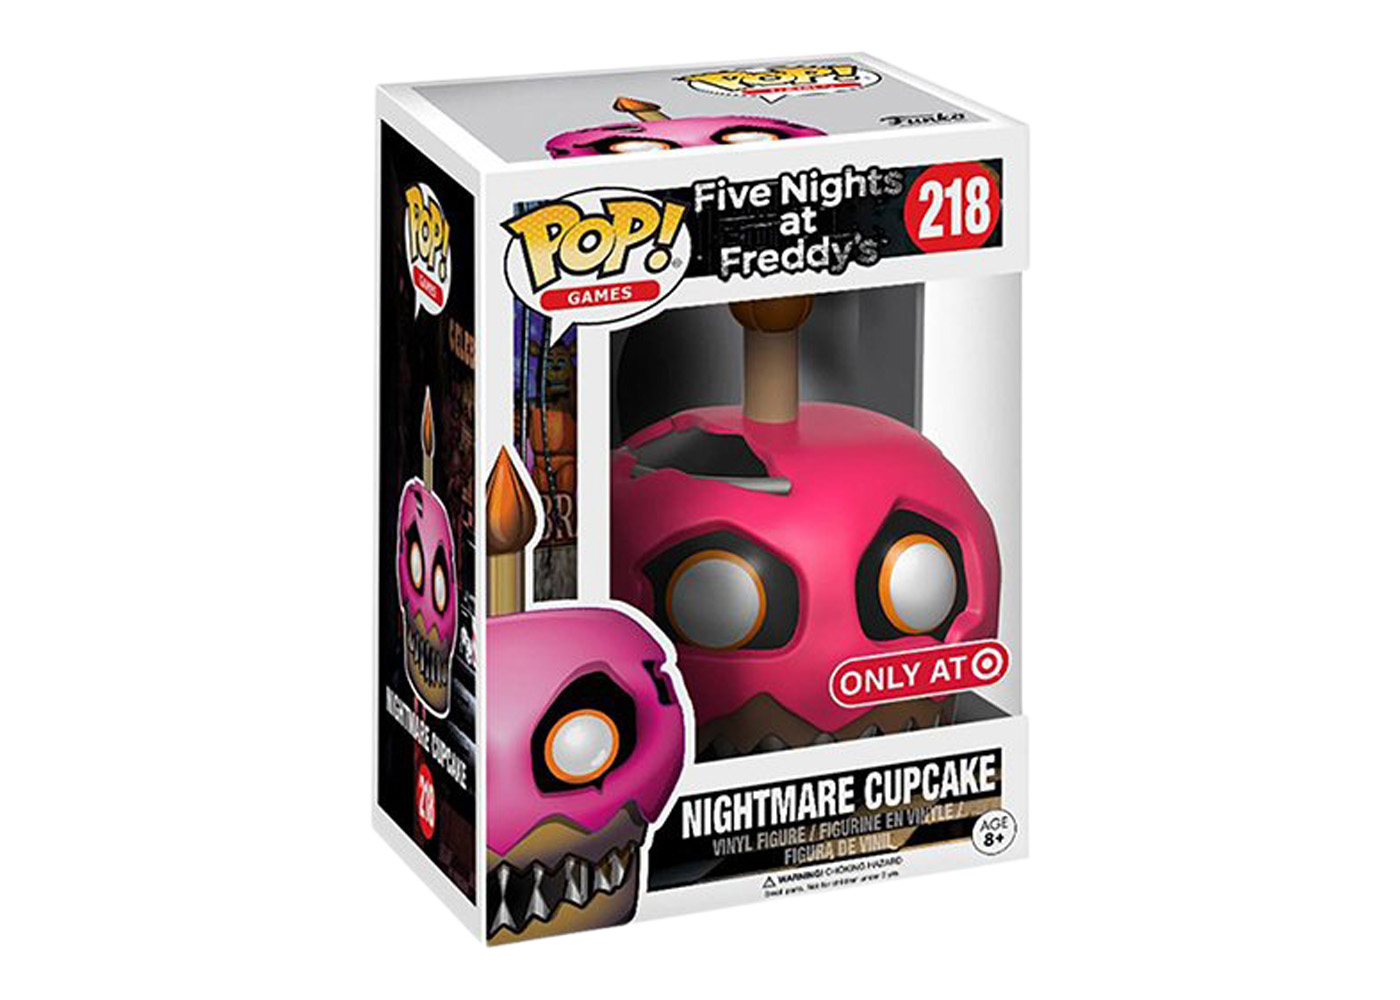 Funko Pop! Games Five Nights at Freddy's Nightmare Cupcake Target 